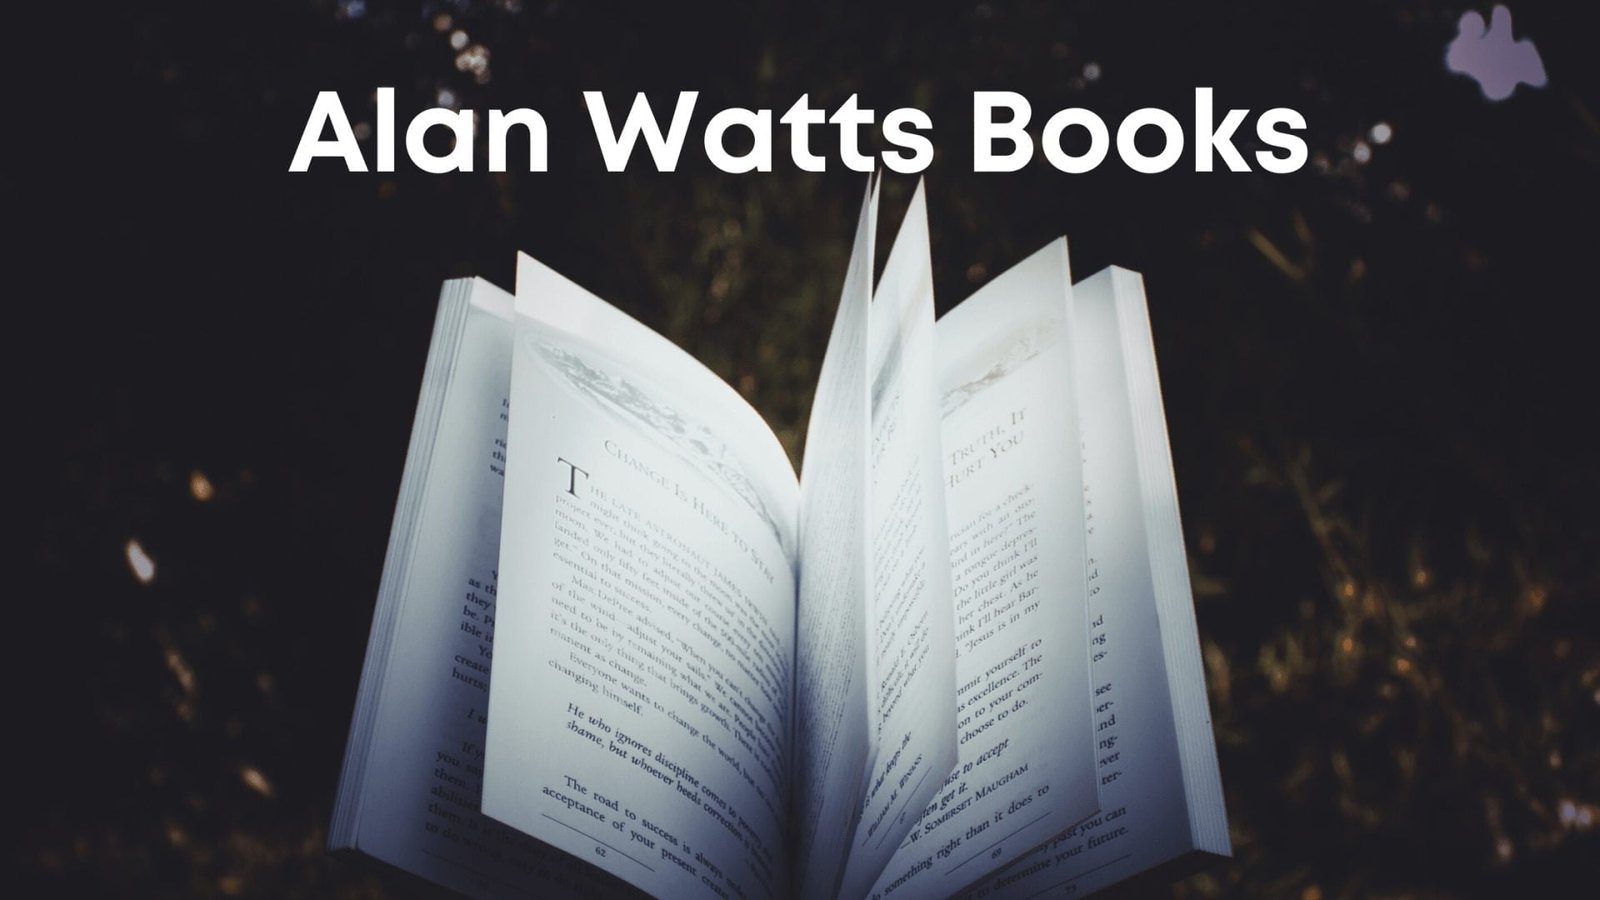 Alan Watts Books